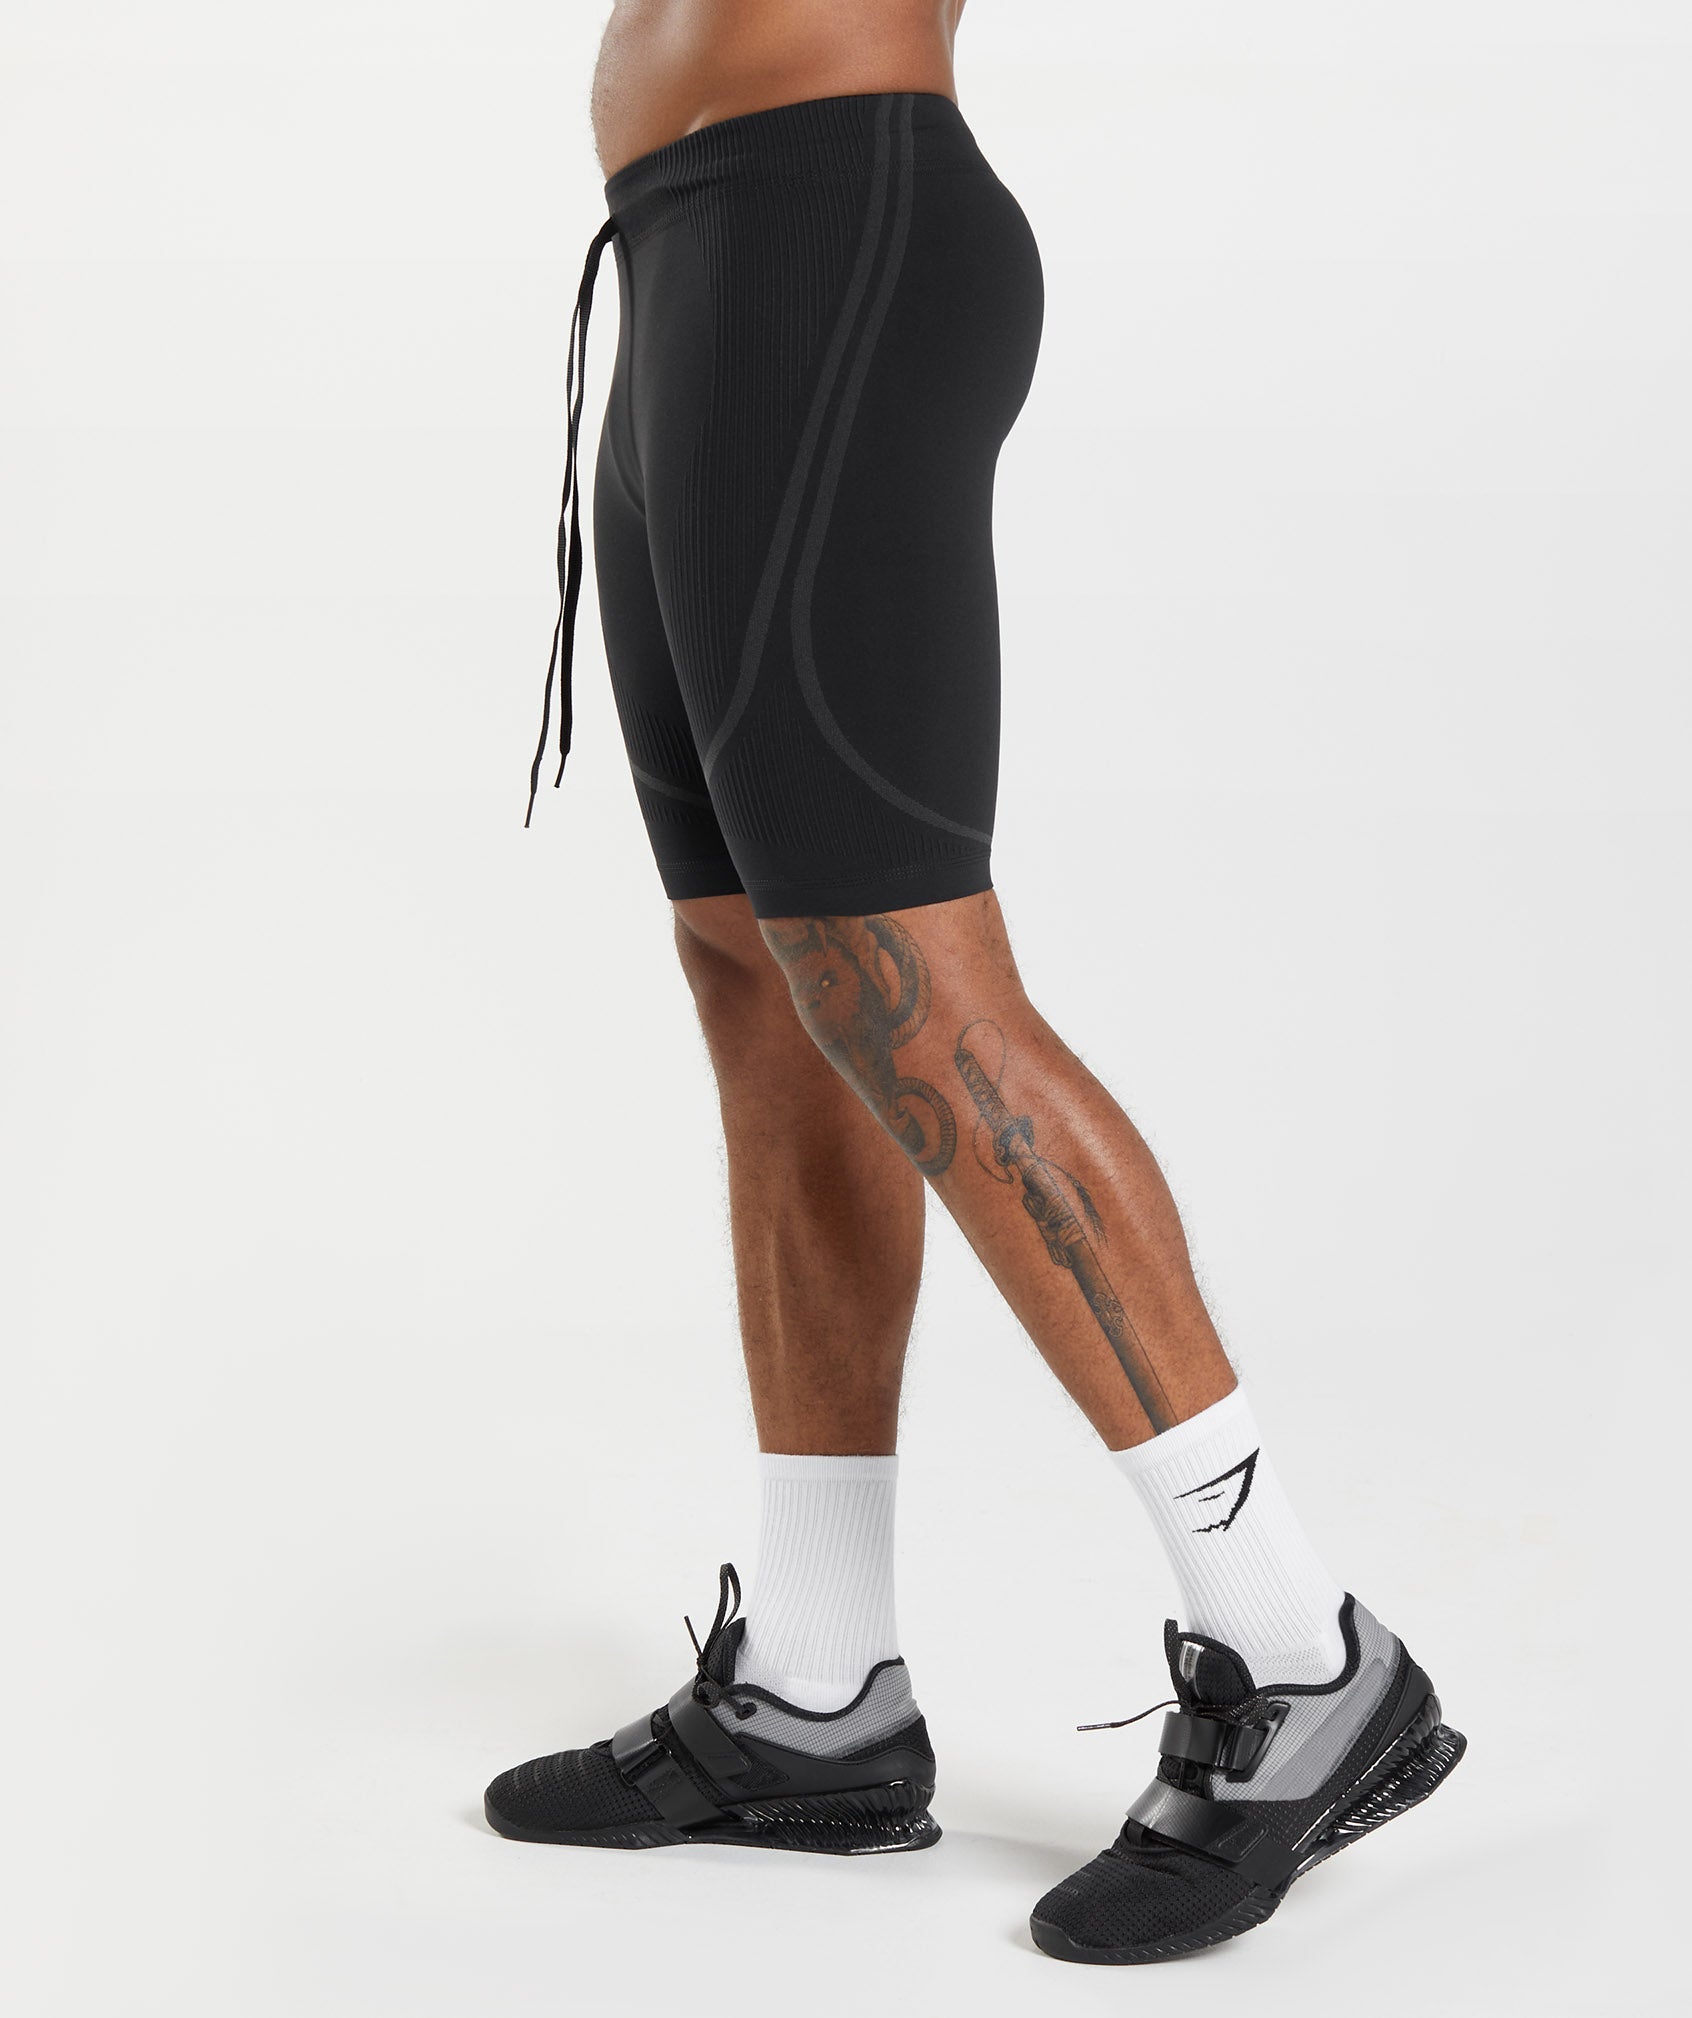 Men's Seamless Shorts & Gym Shorts - Gymshark